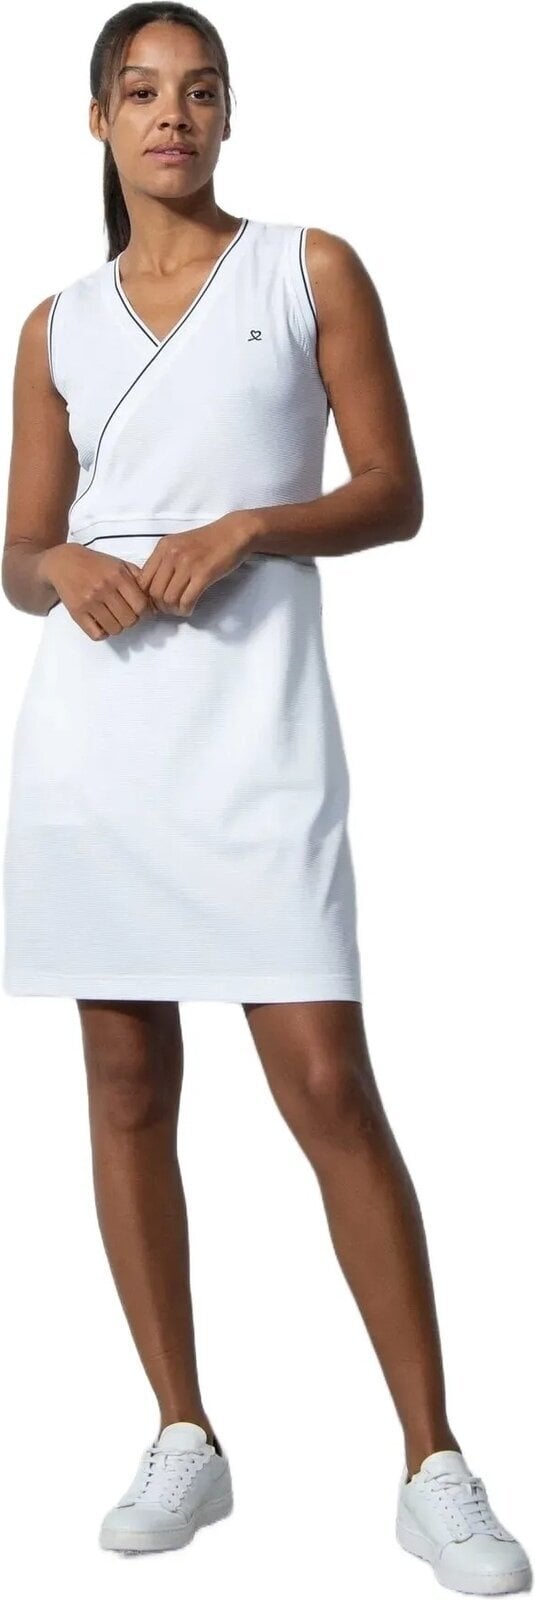 Skirt / Dress Daily Sports Paris Sleeveless Dress White L